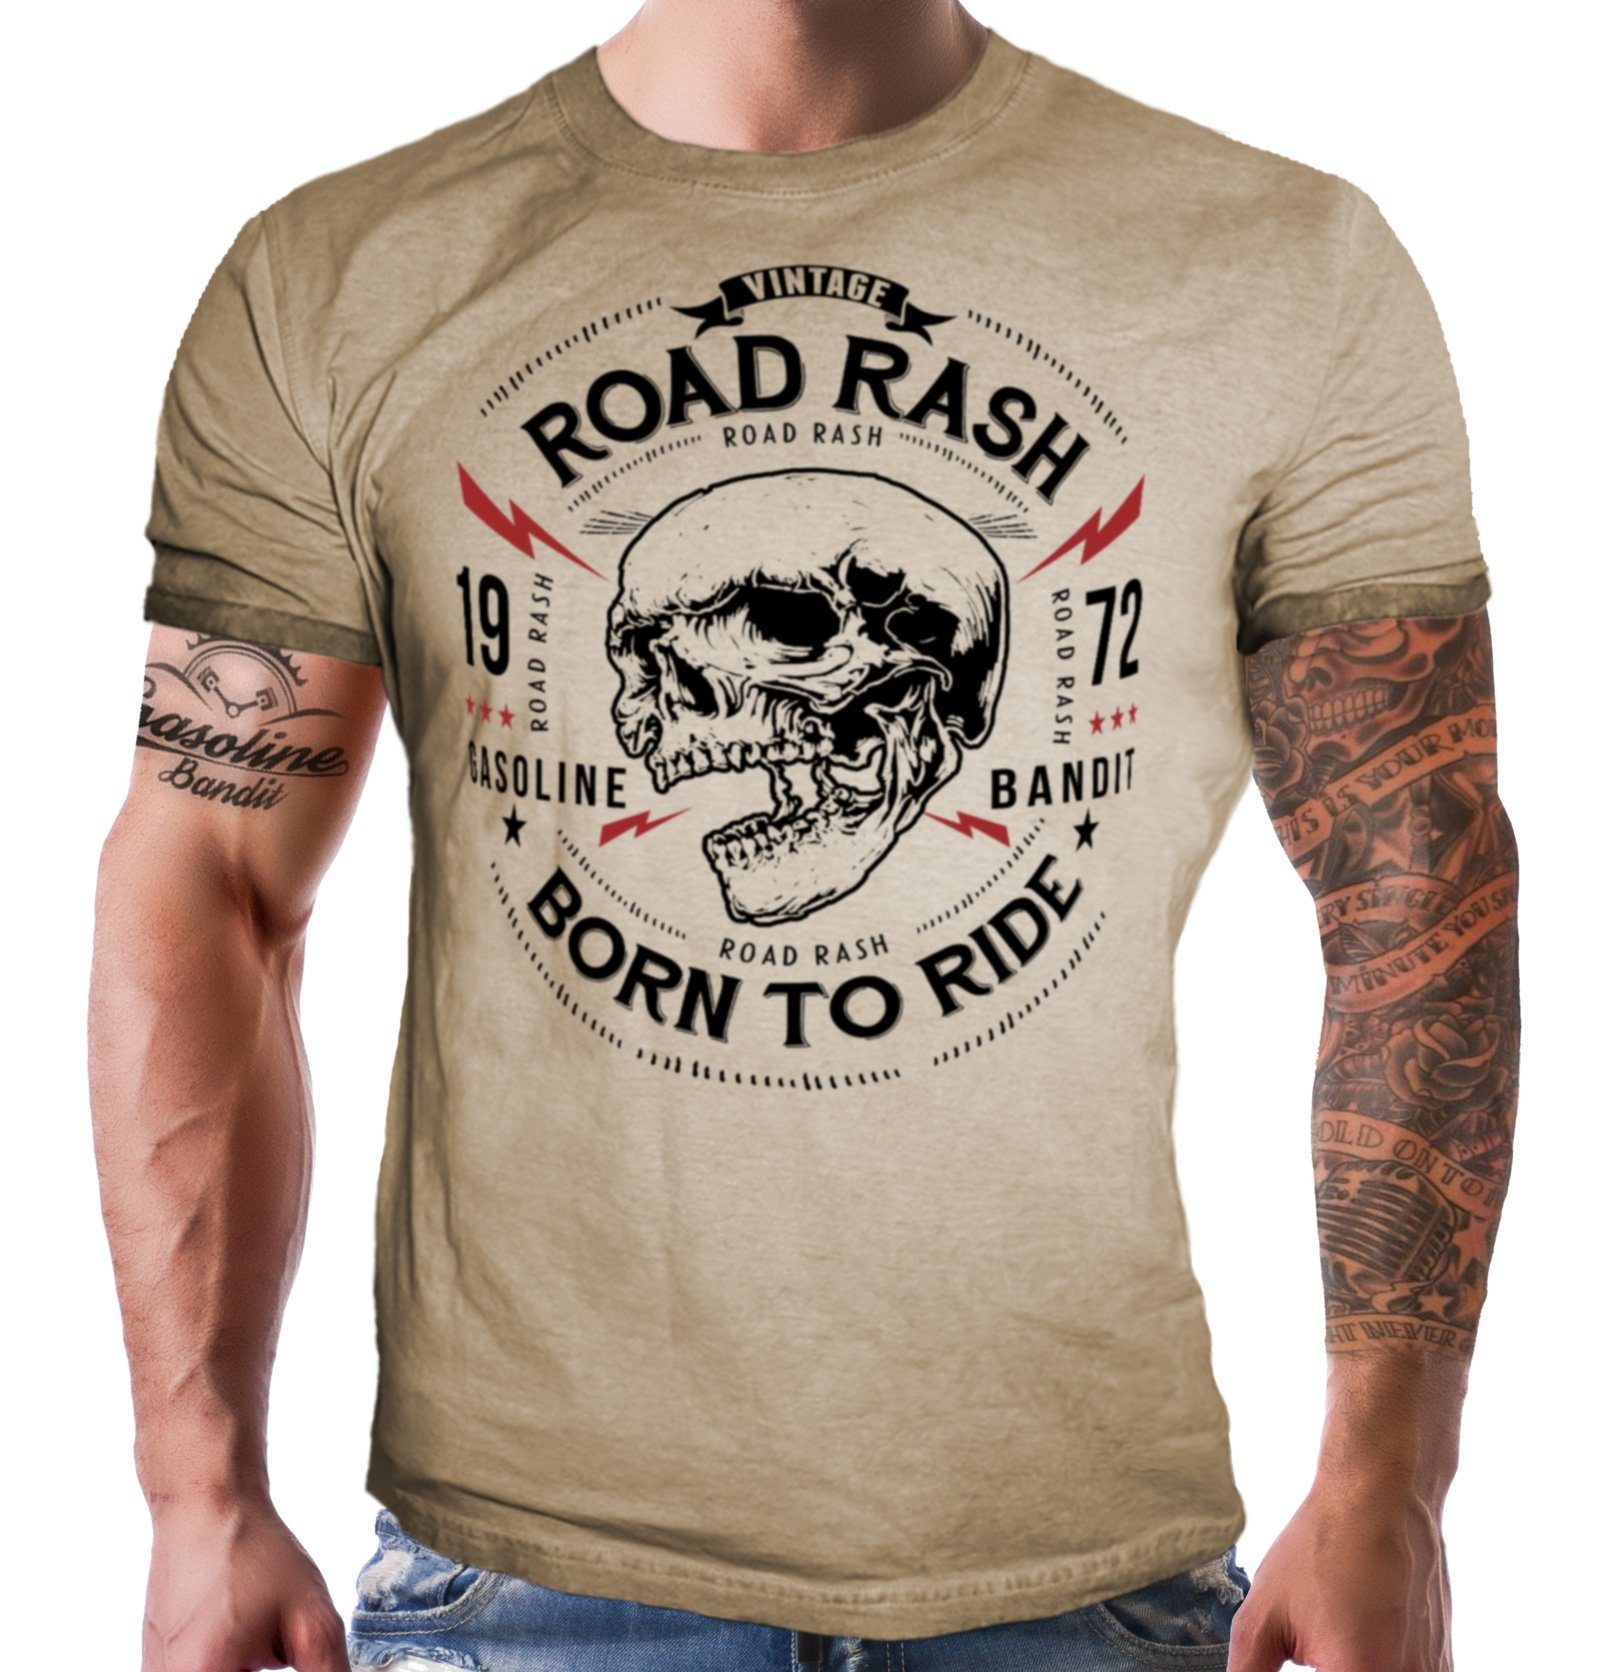 GASOLINE BANDIT® T-Shirt für Biker, Racer in Washed Sand Optik: Road Rash - Born to Ride